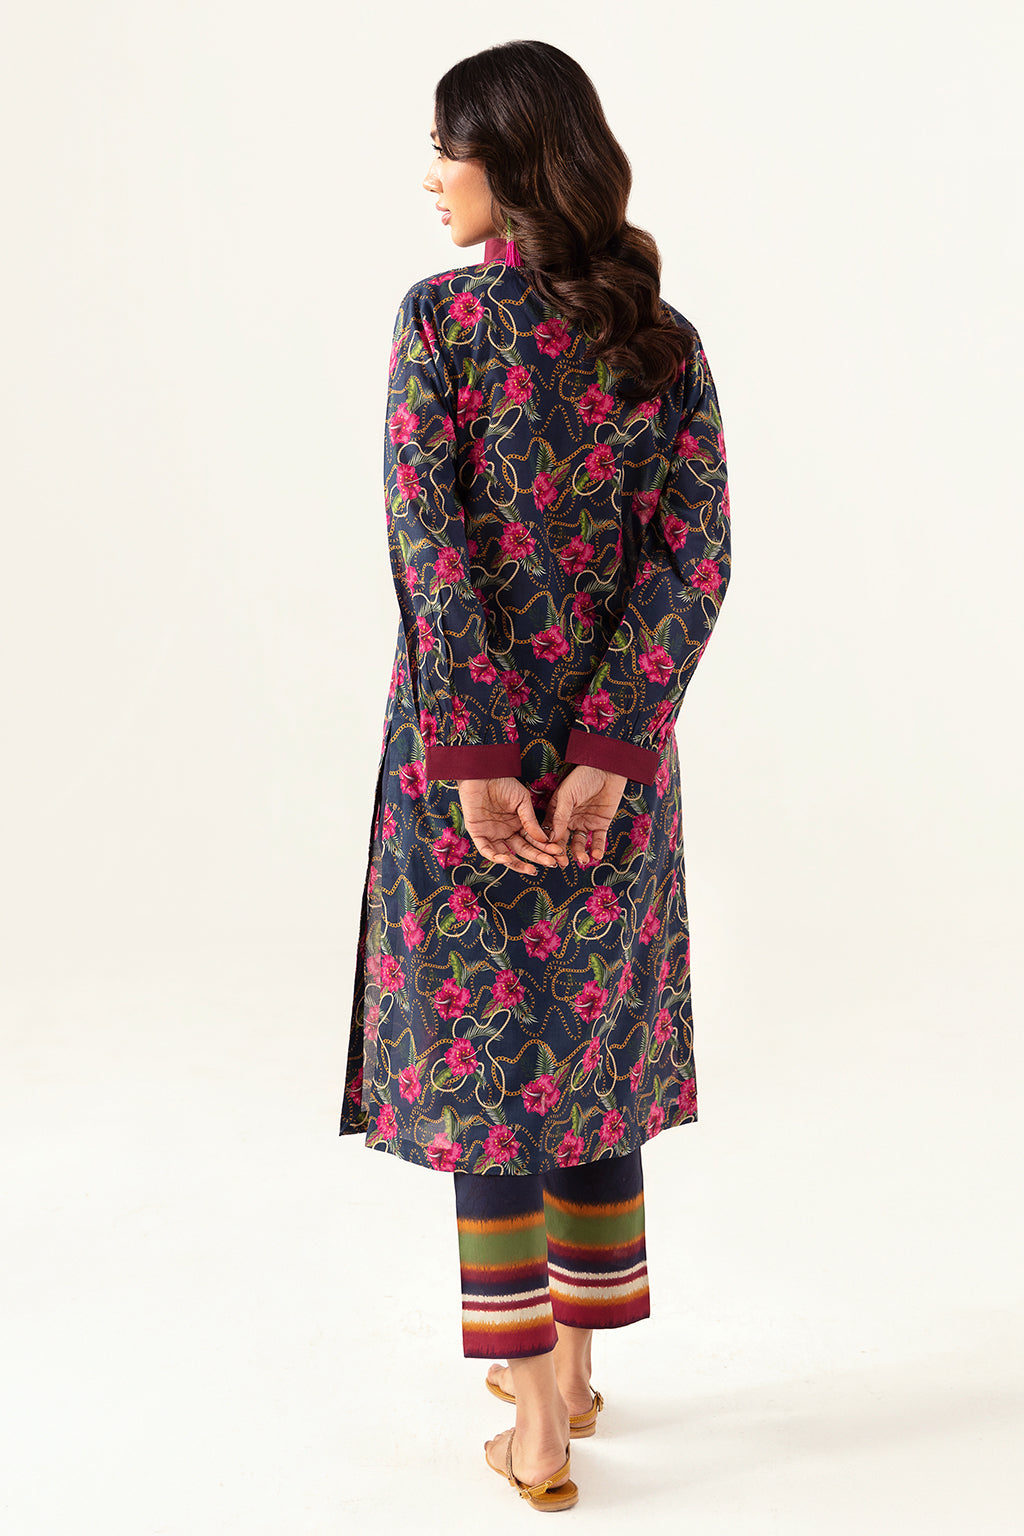 Ramsha | Pinted Lawn | RP-101 - Khanumjan  Pakistani Clothes and Designer Dresses in UK, USA 